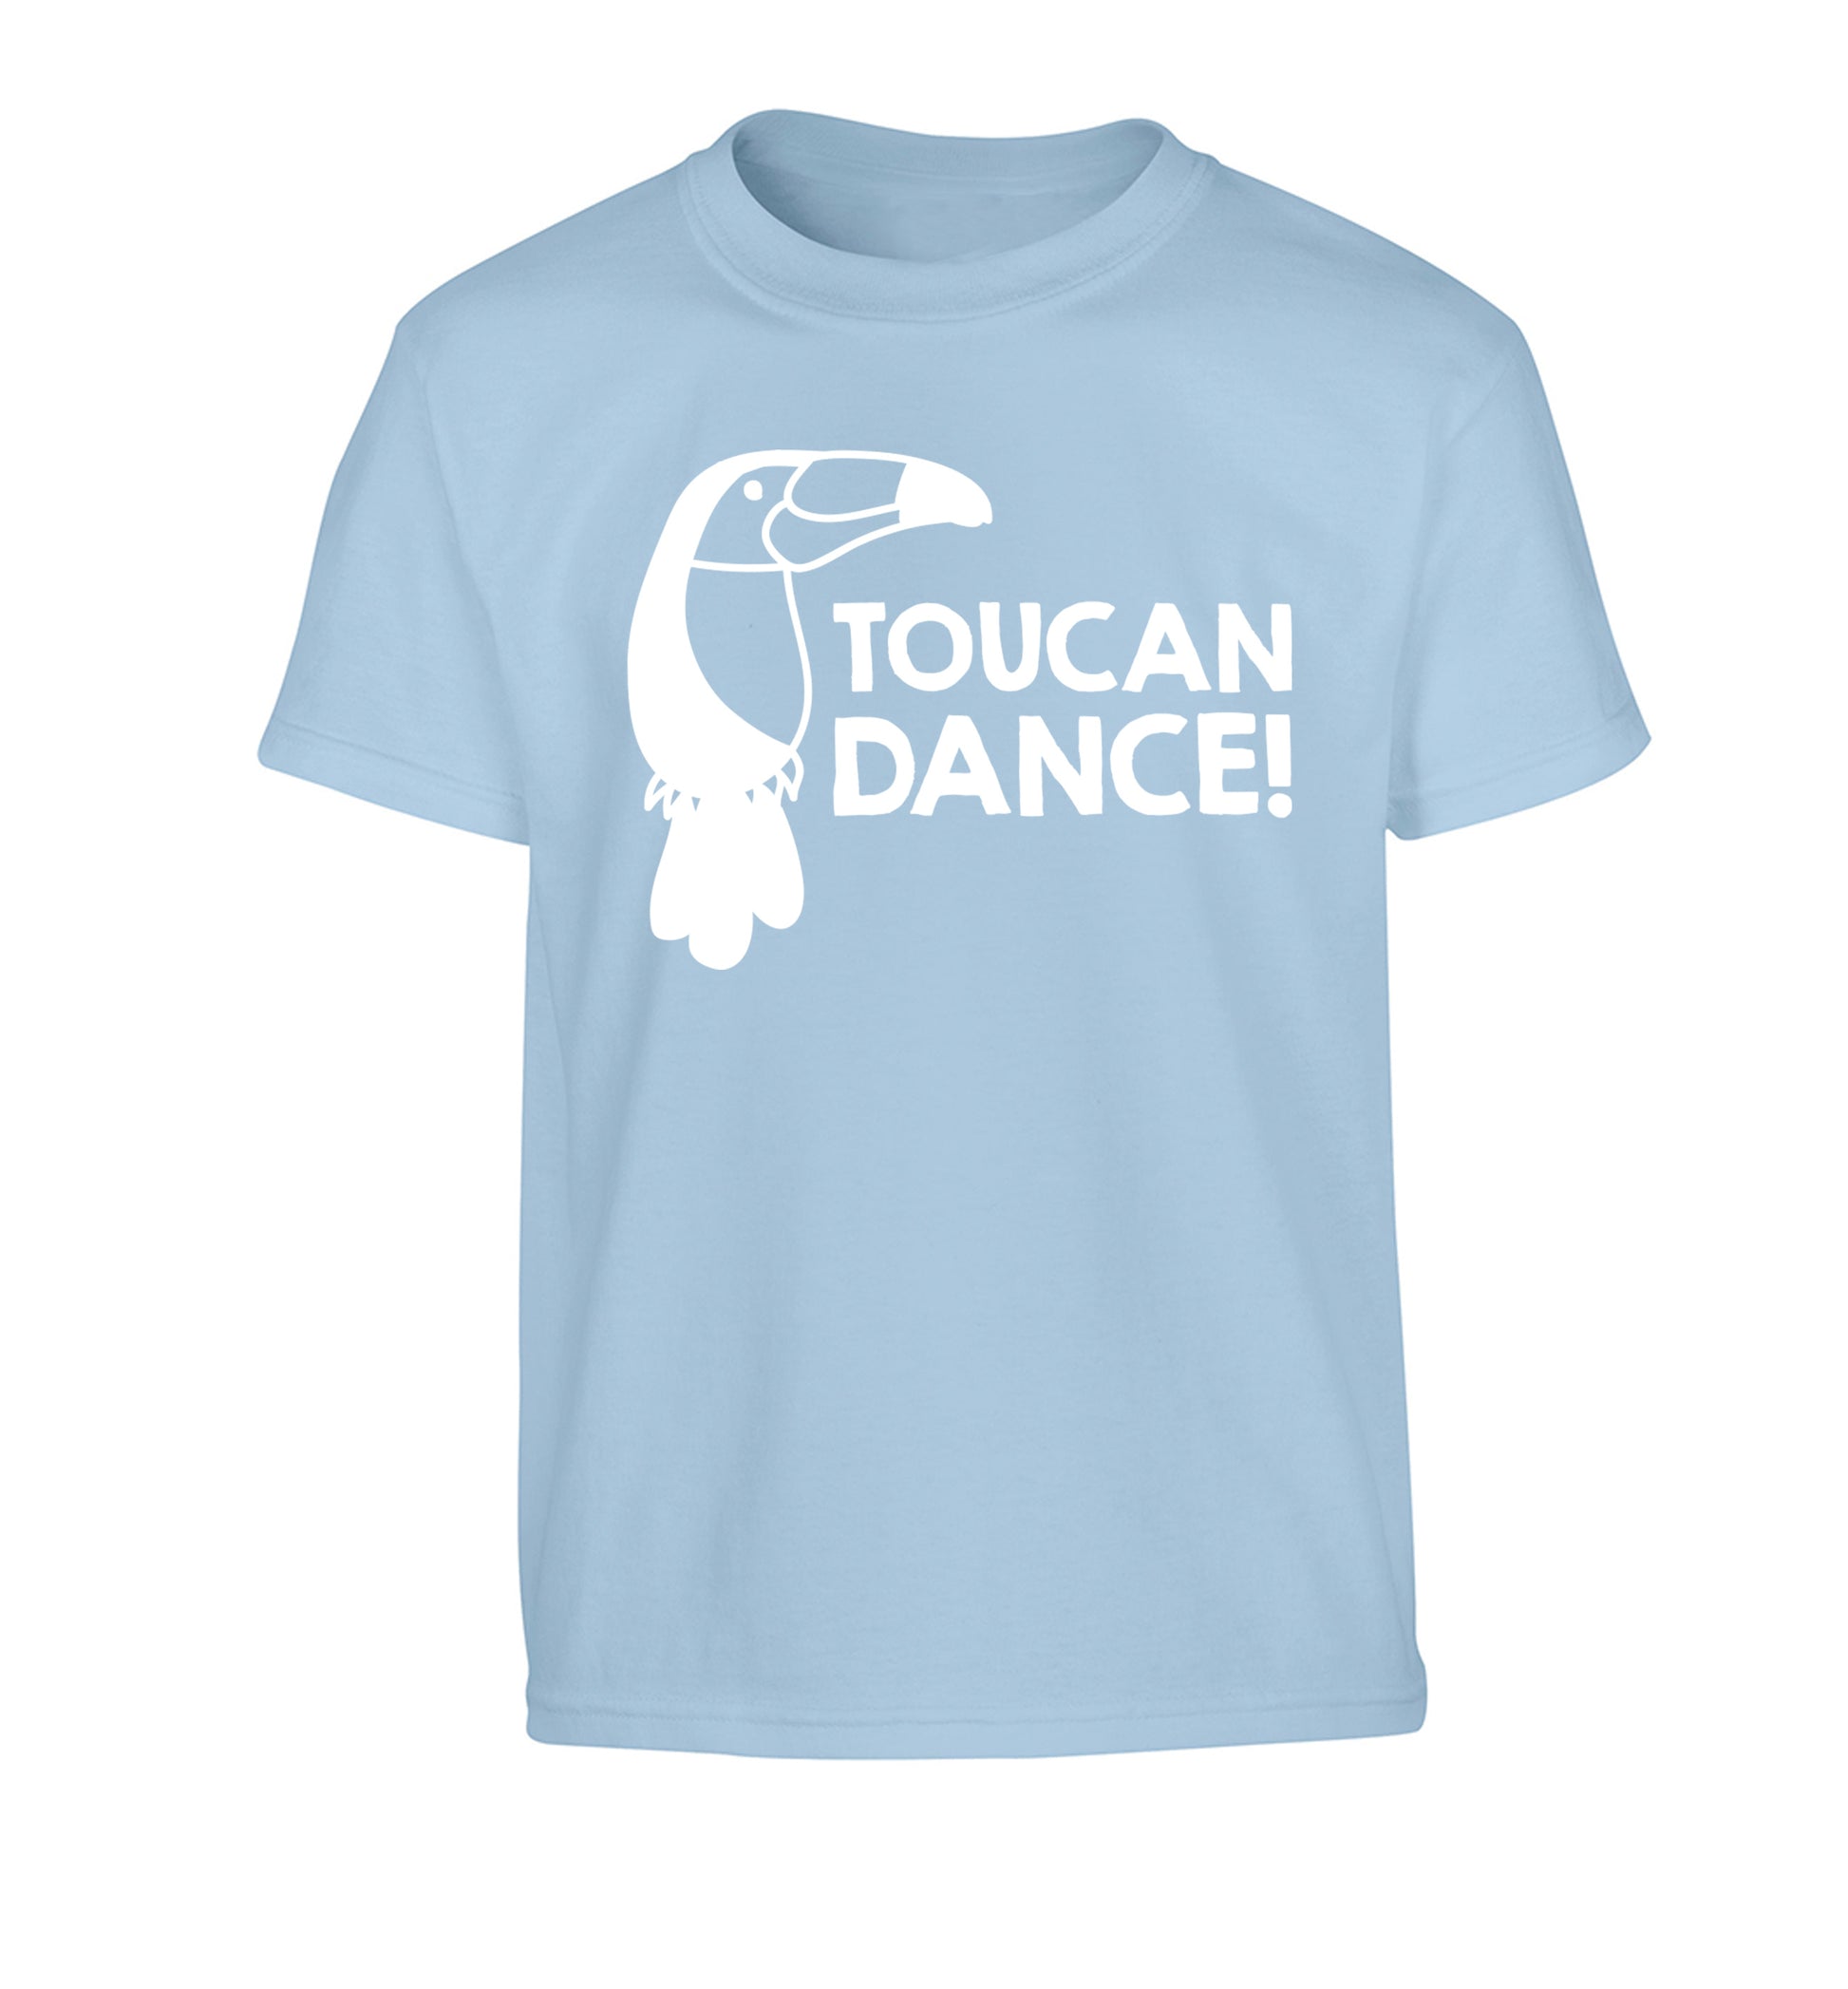 Toucan dance Children's light blue Tshirt 12-13 Years